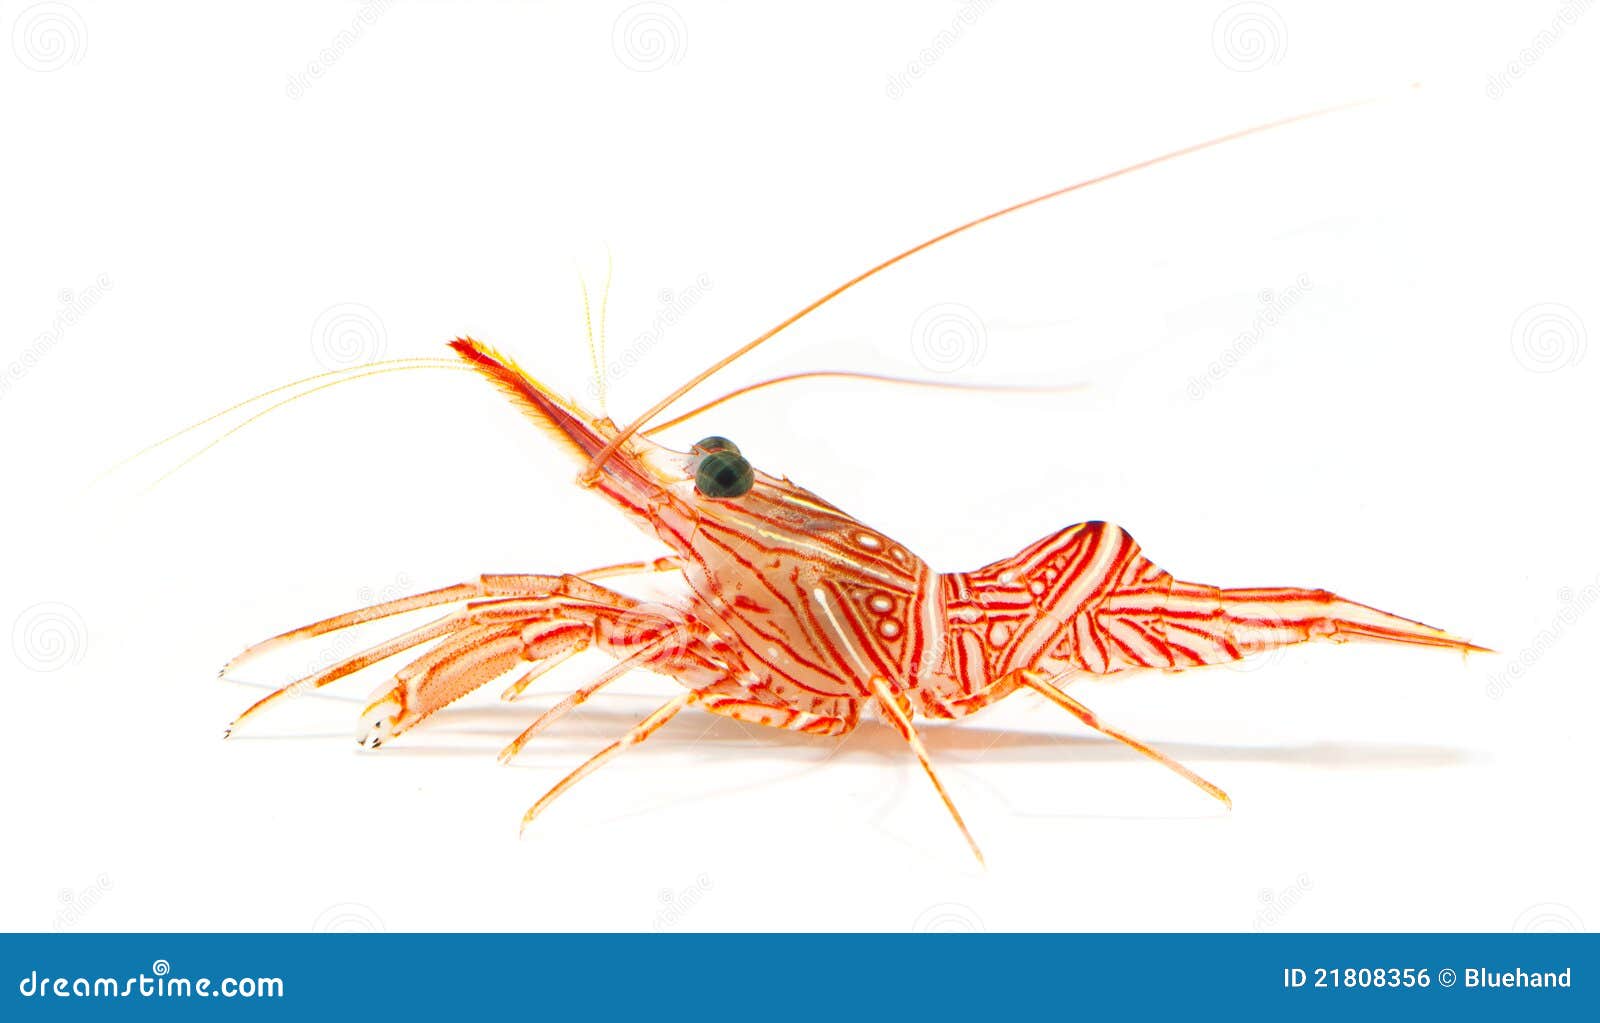 hinge-beak shrimp, camel shrimp, dancing shrimp is